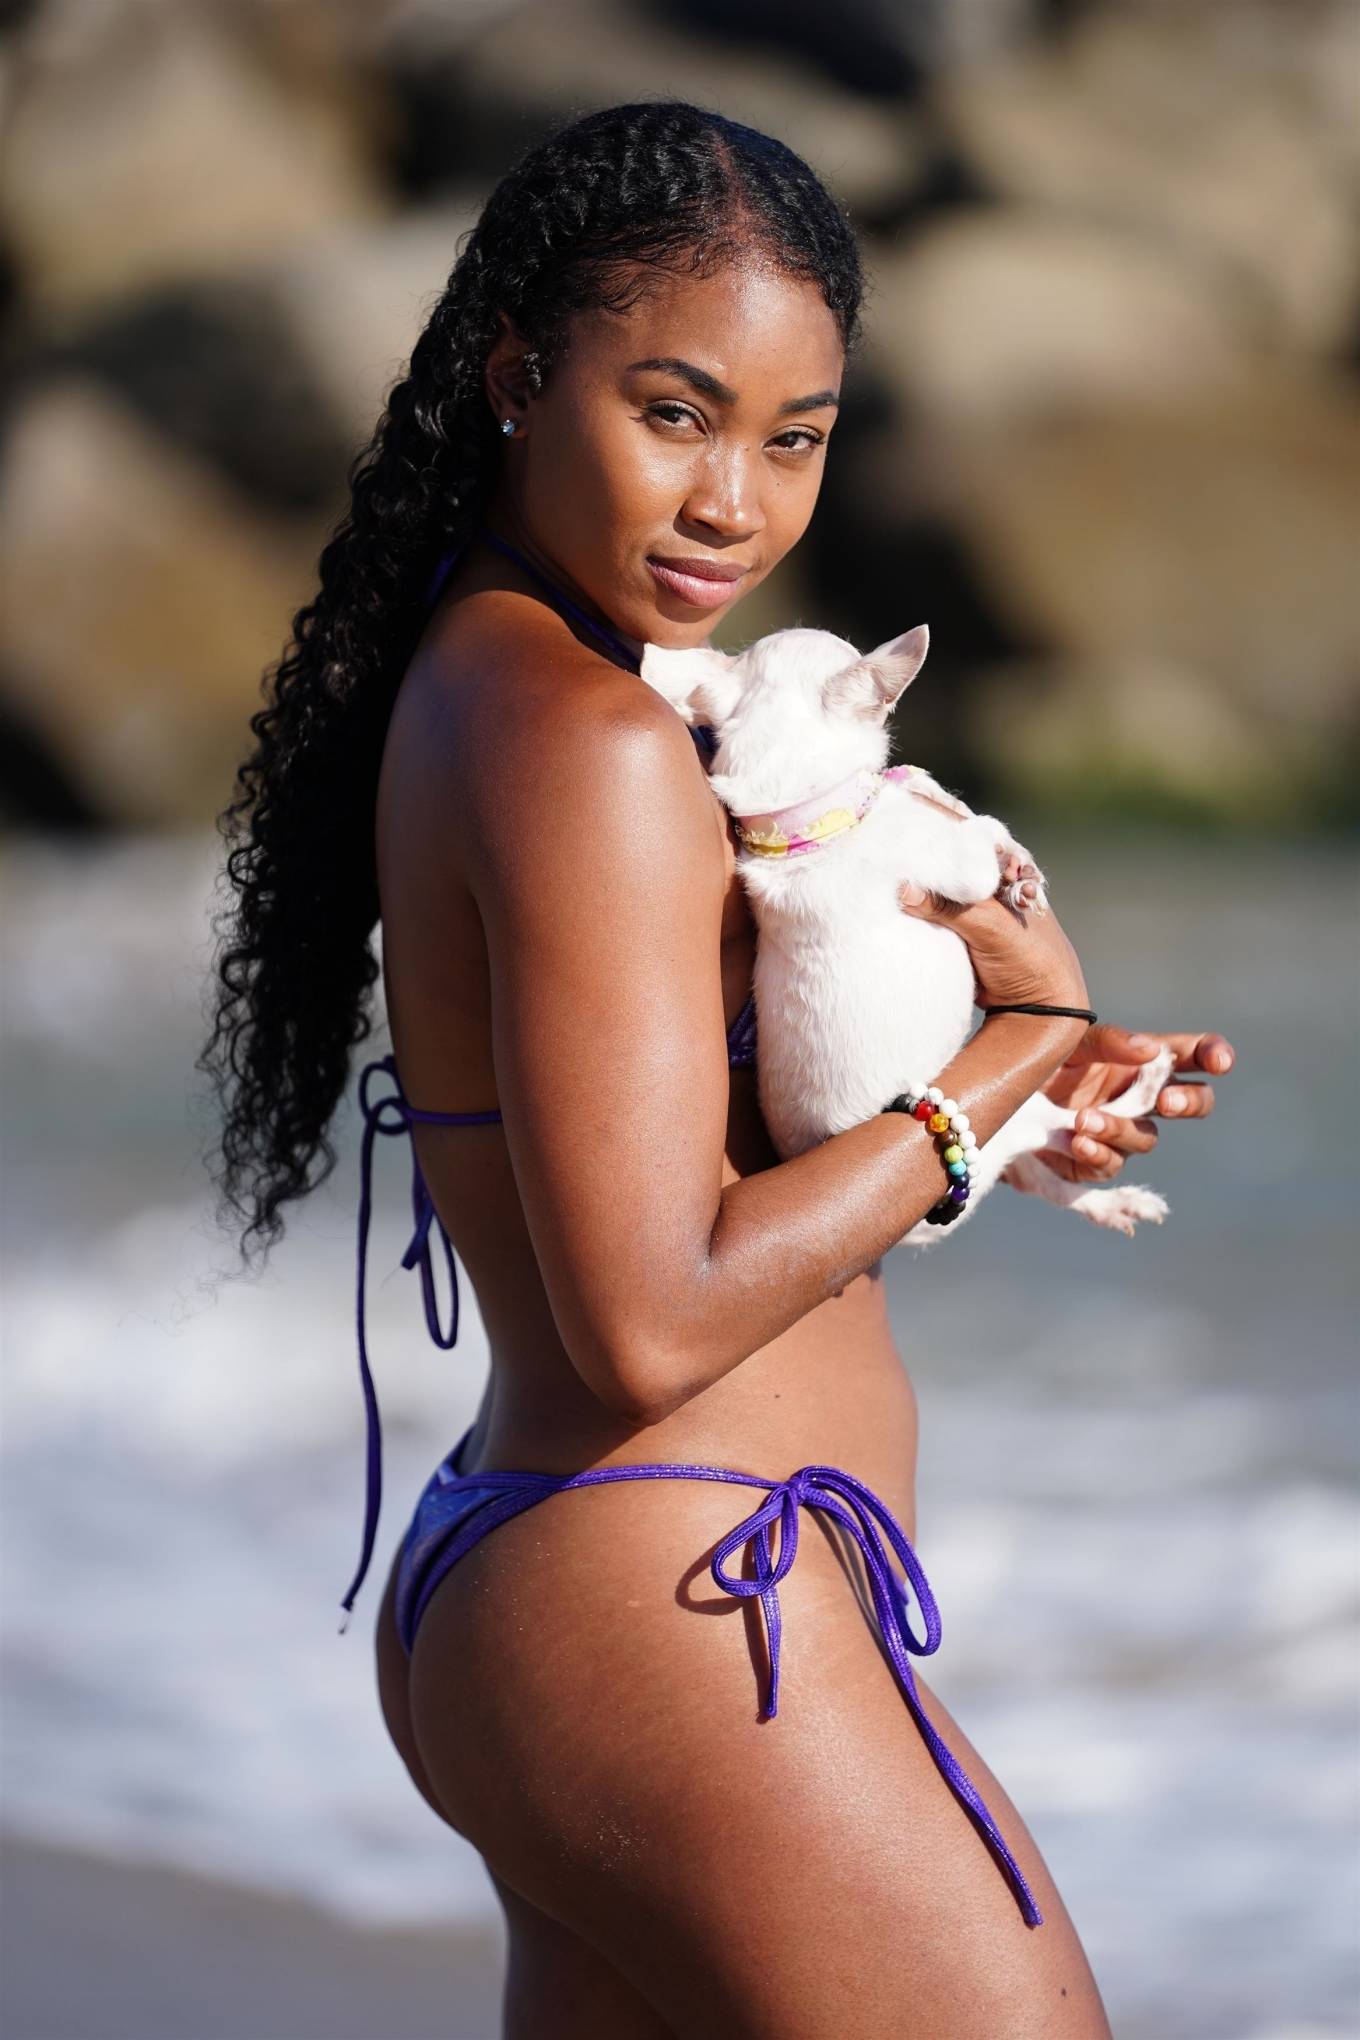 Ariane Andrew in Purple Bikini - Taking her dog to a beach in Santa Monica....